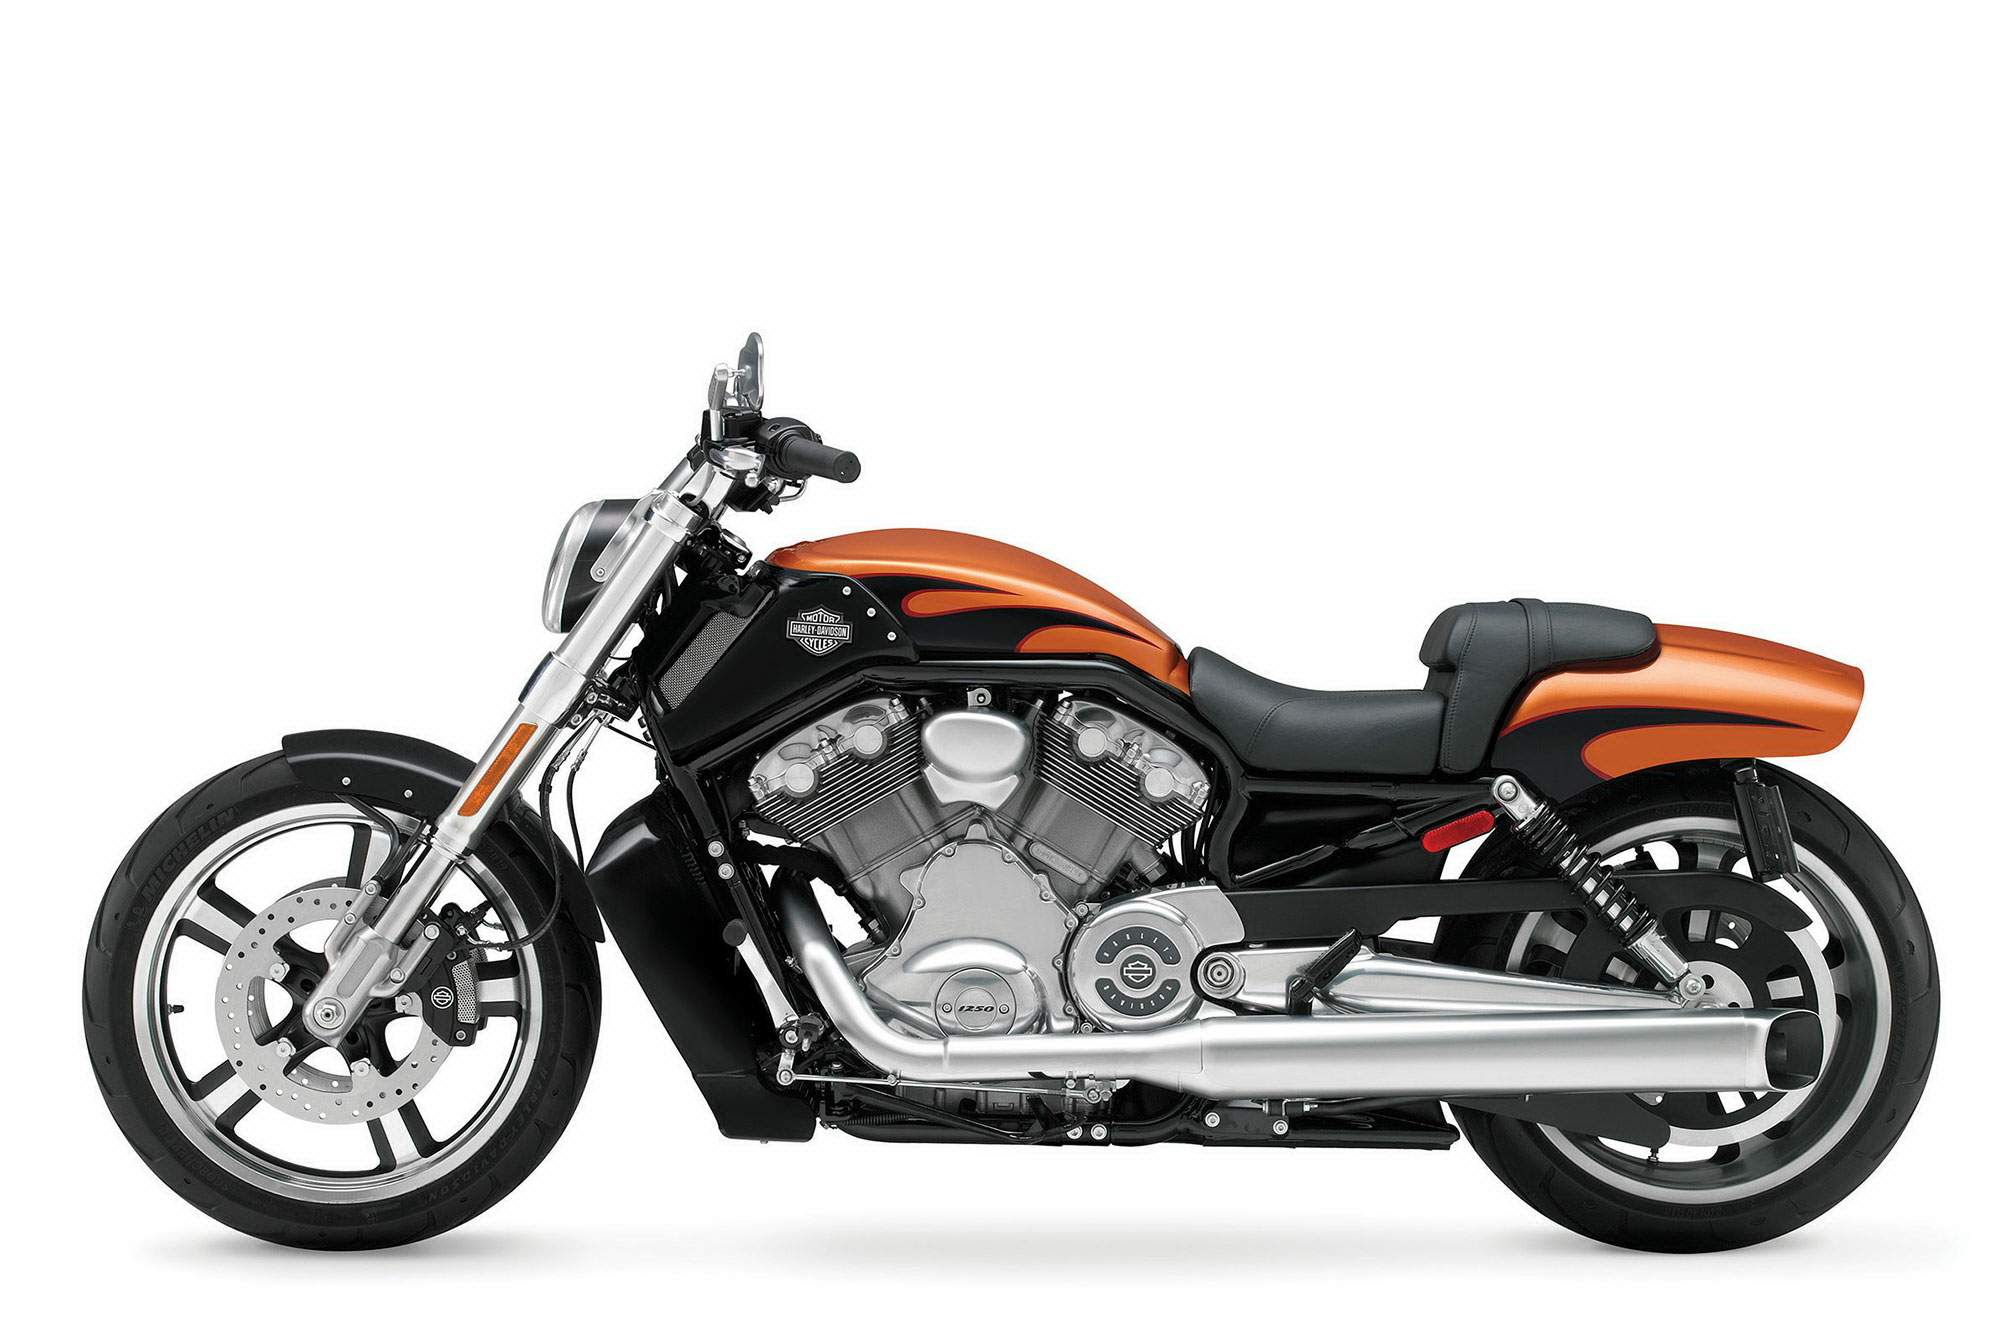 Motorrad-Hebebühne L für Harley Davidson V-Rod /V-Rod Muscle VRSCF VRSCA/W 